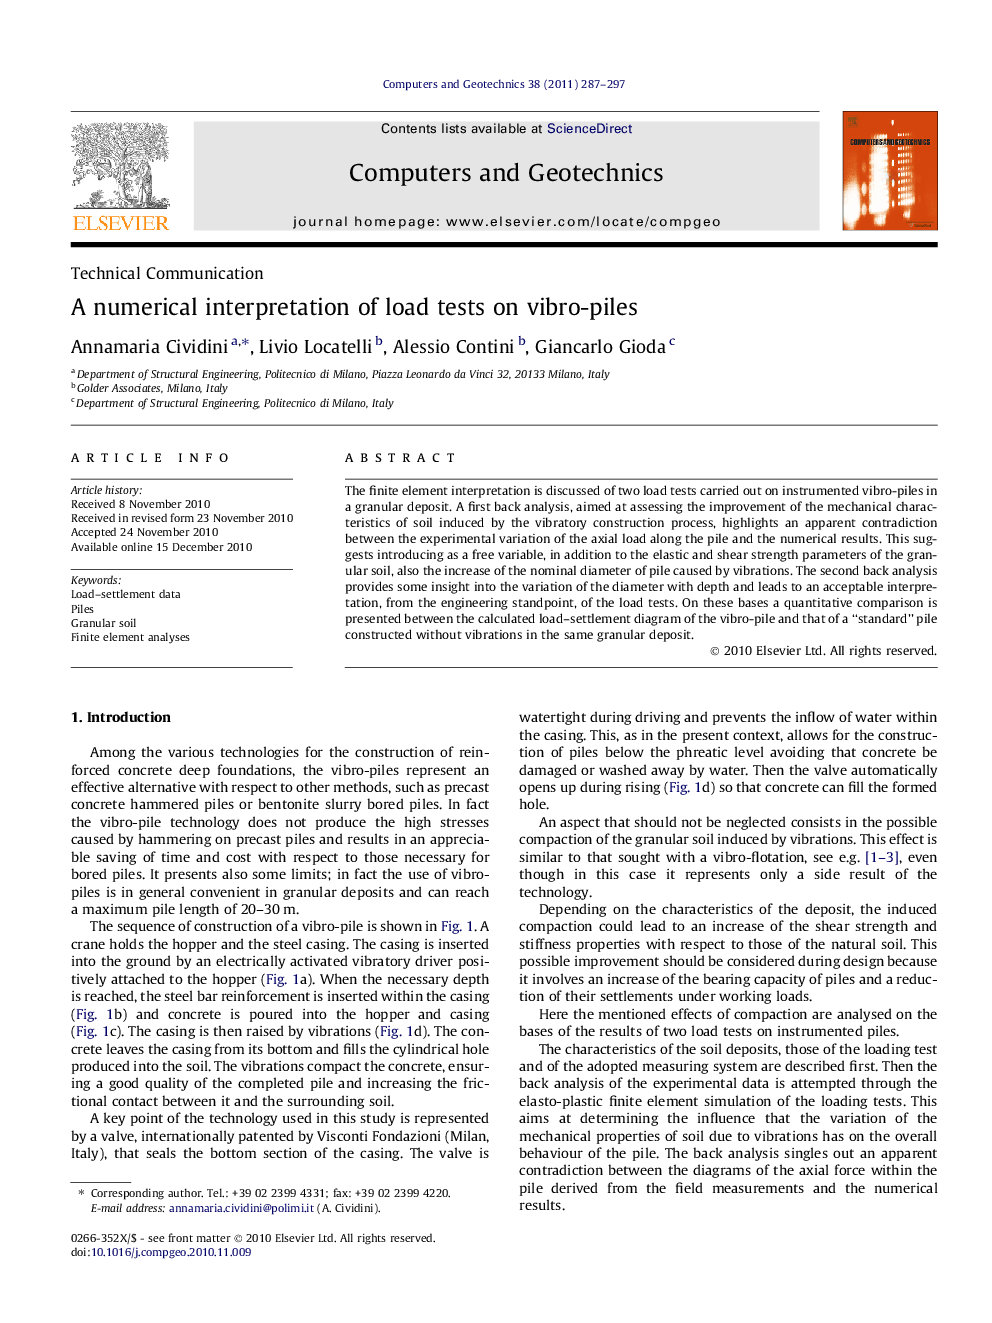 A numerical interpretation of load tests on vibro-piles